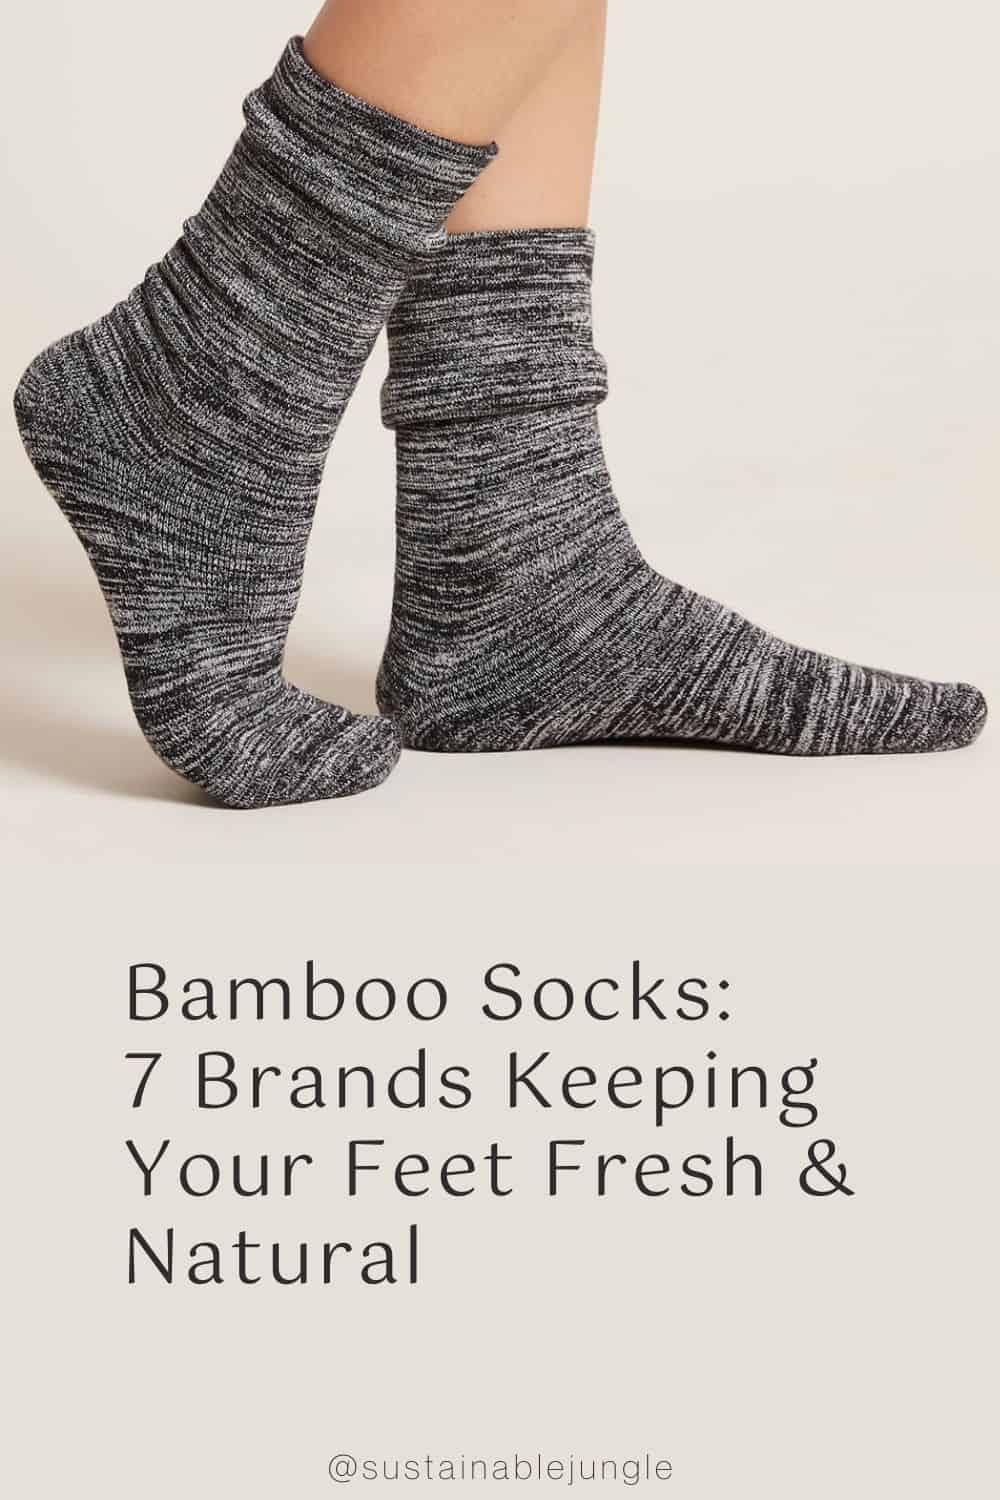 Bamboo Socks: 7 Brands Keeping Your Feet Fresh & Natural Image by Boody #bamboosocks #bambooanklesocks #bambooathleticsocks #organicbamboosocks #socksmadefrombamboo #bamboodresssocks #sustainablejungle